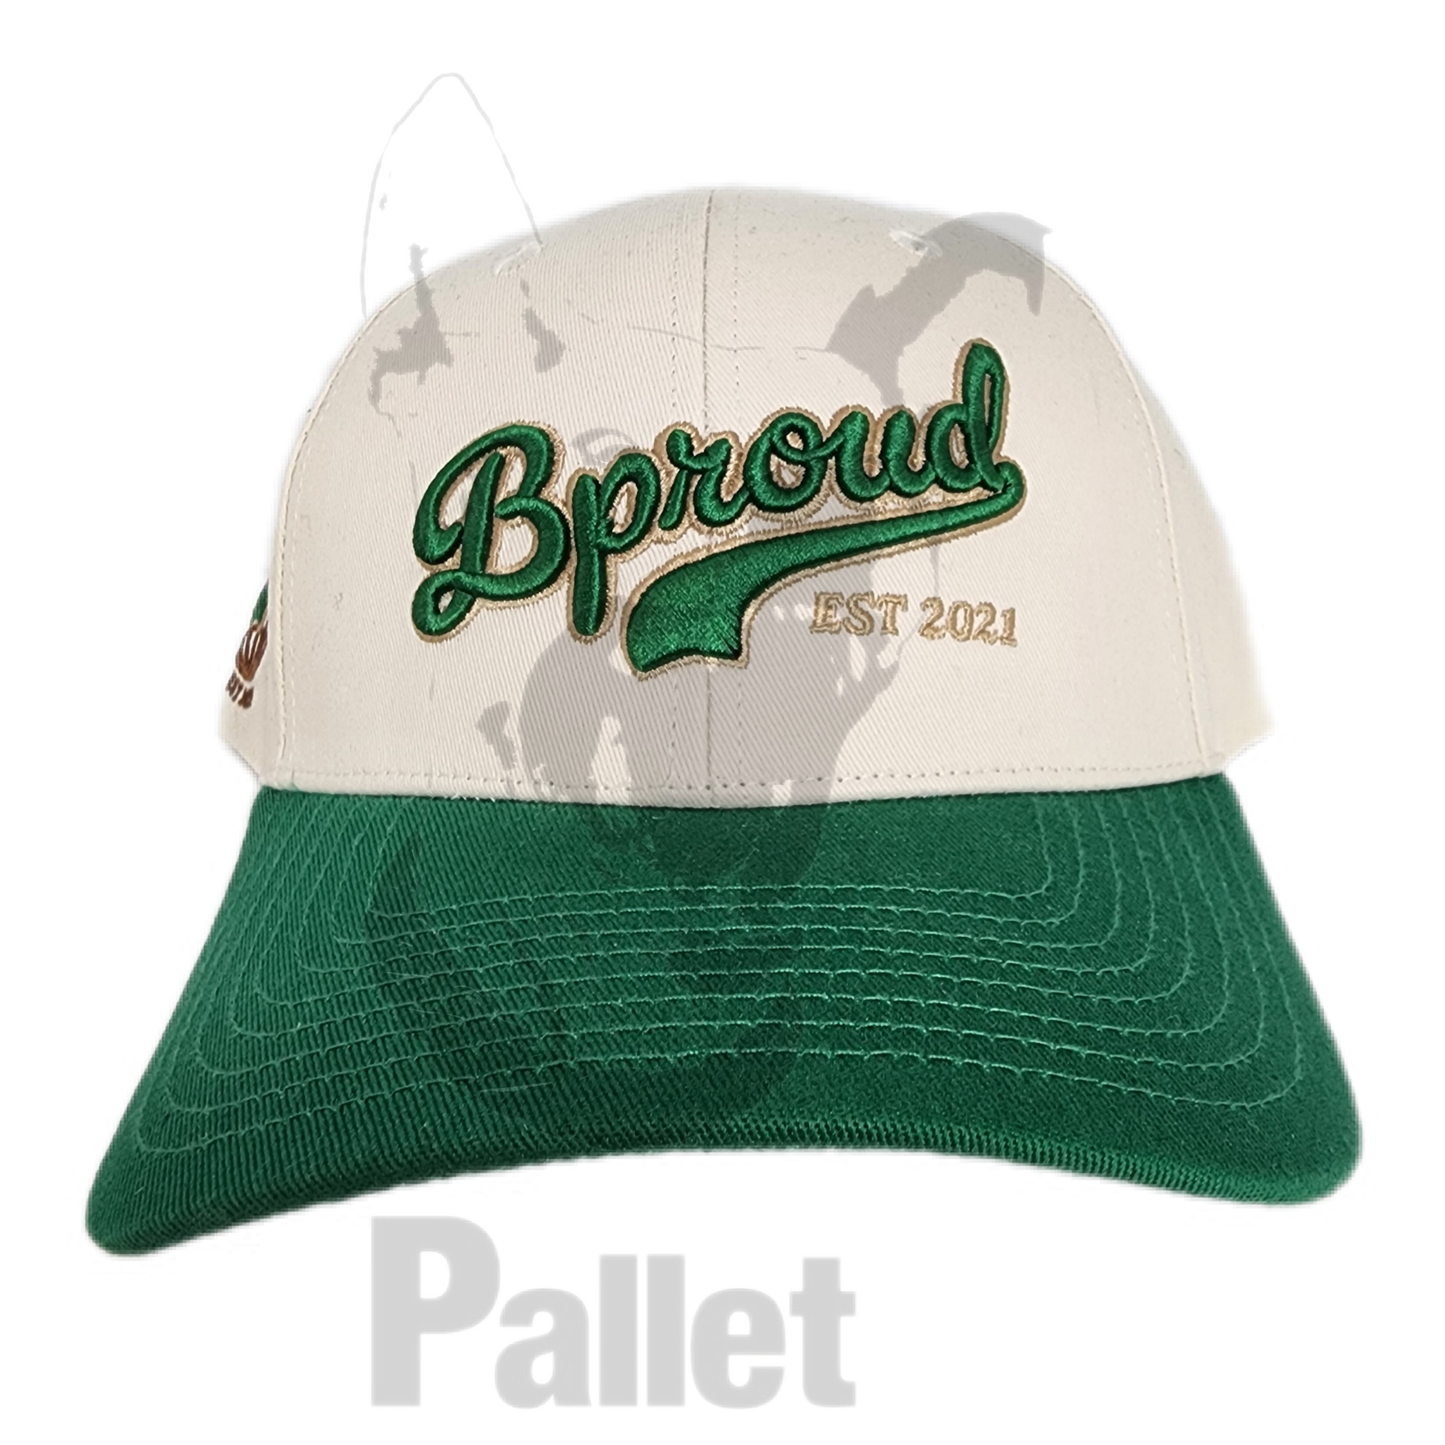 BProud - "Green Baseball Hats"